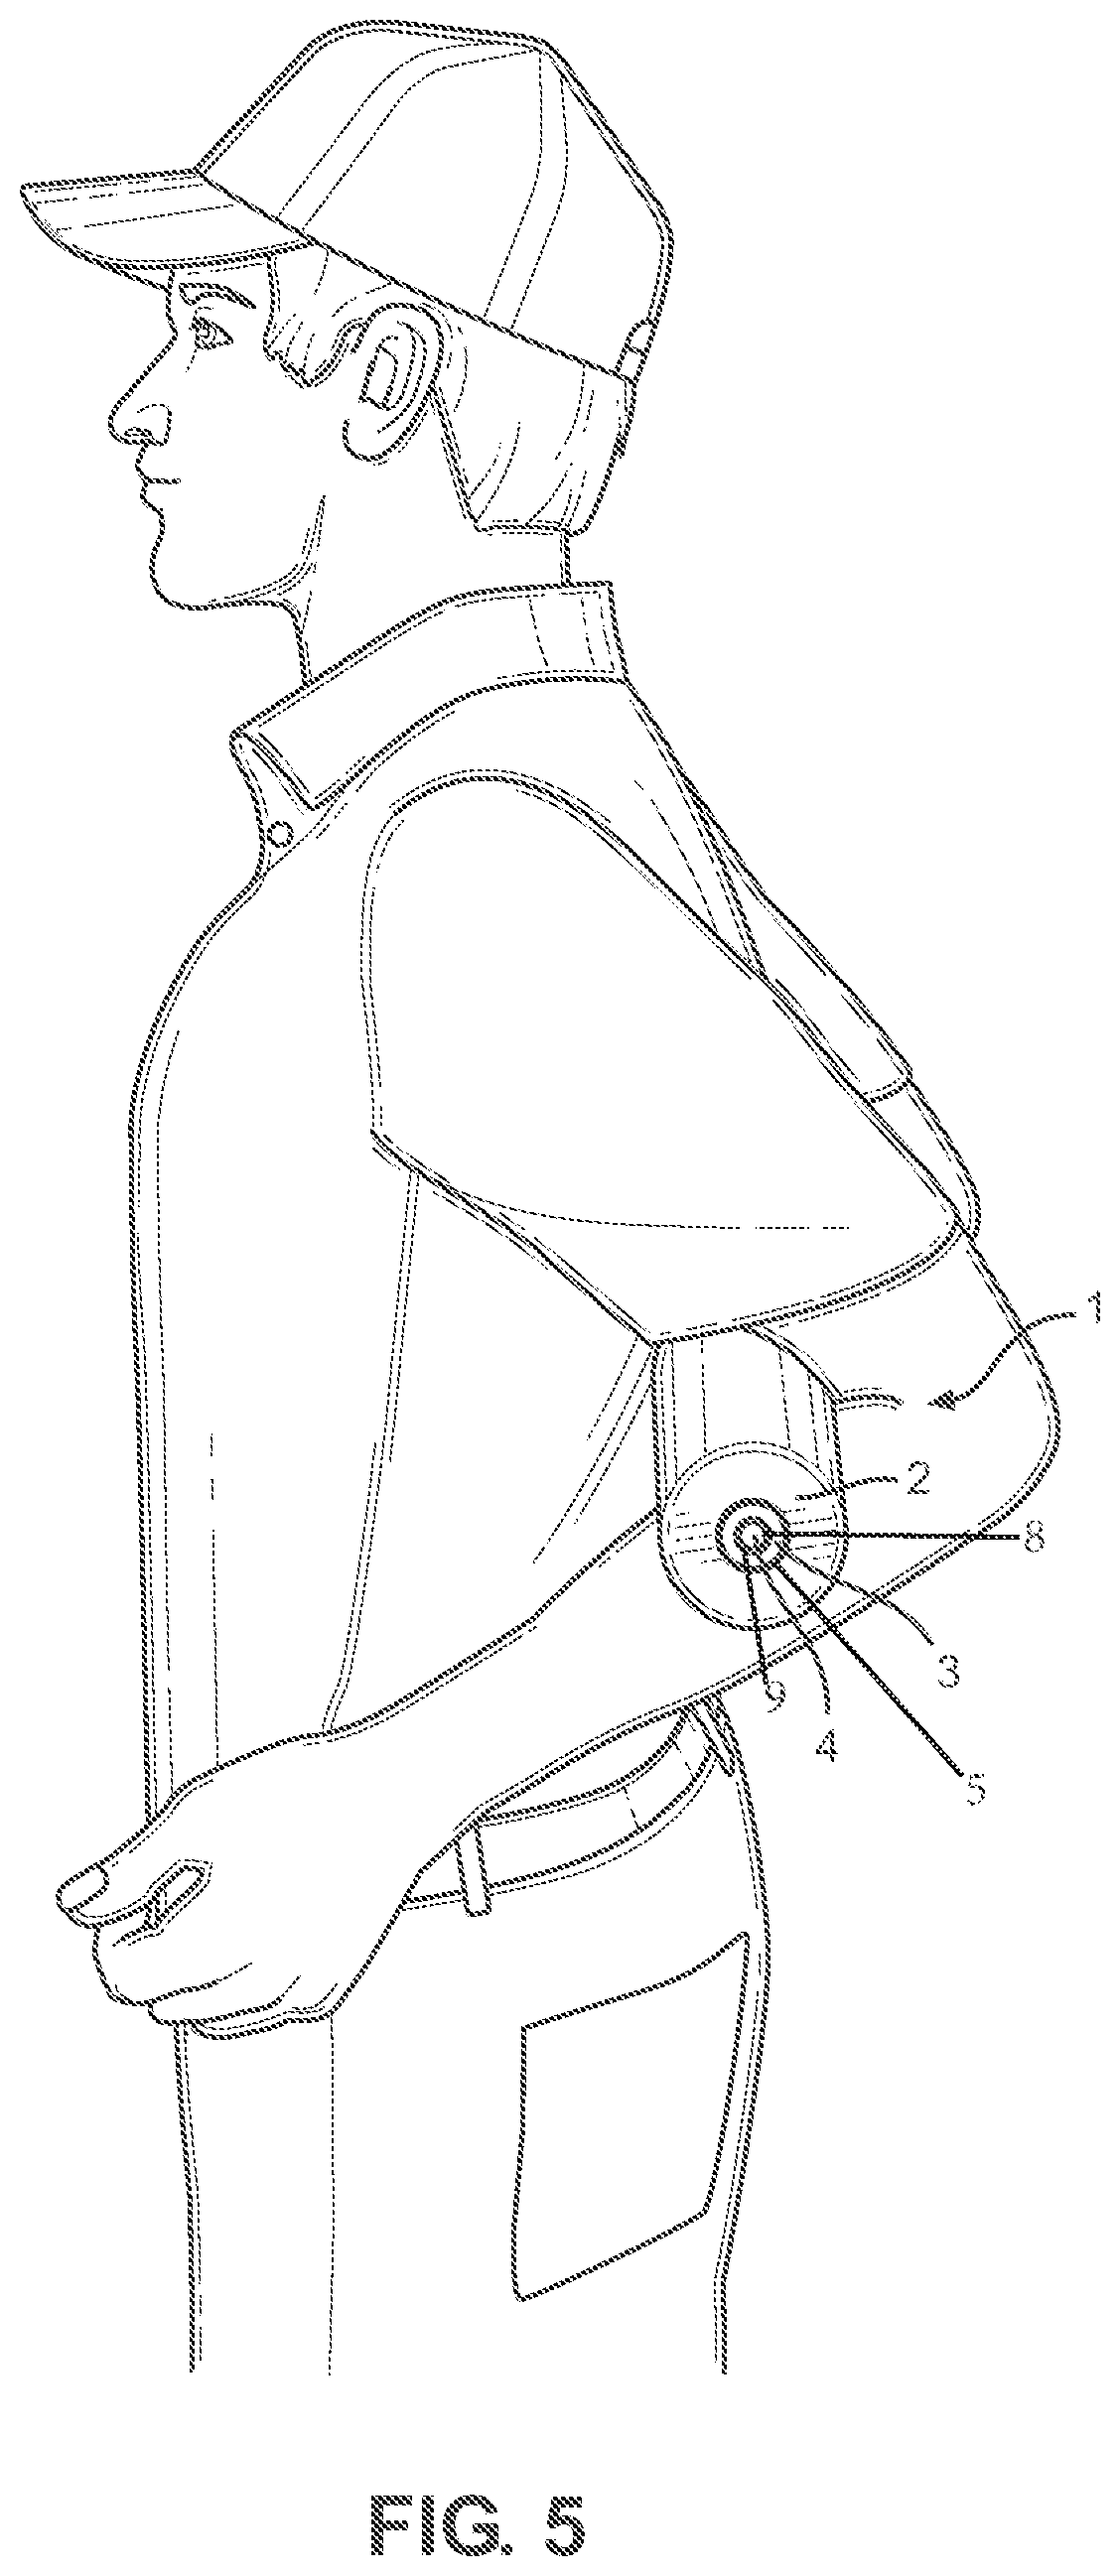 Orthopedic posture improvement device